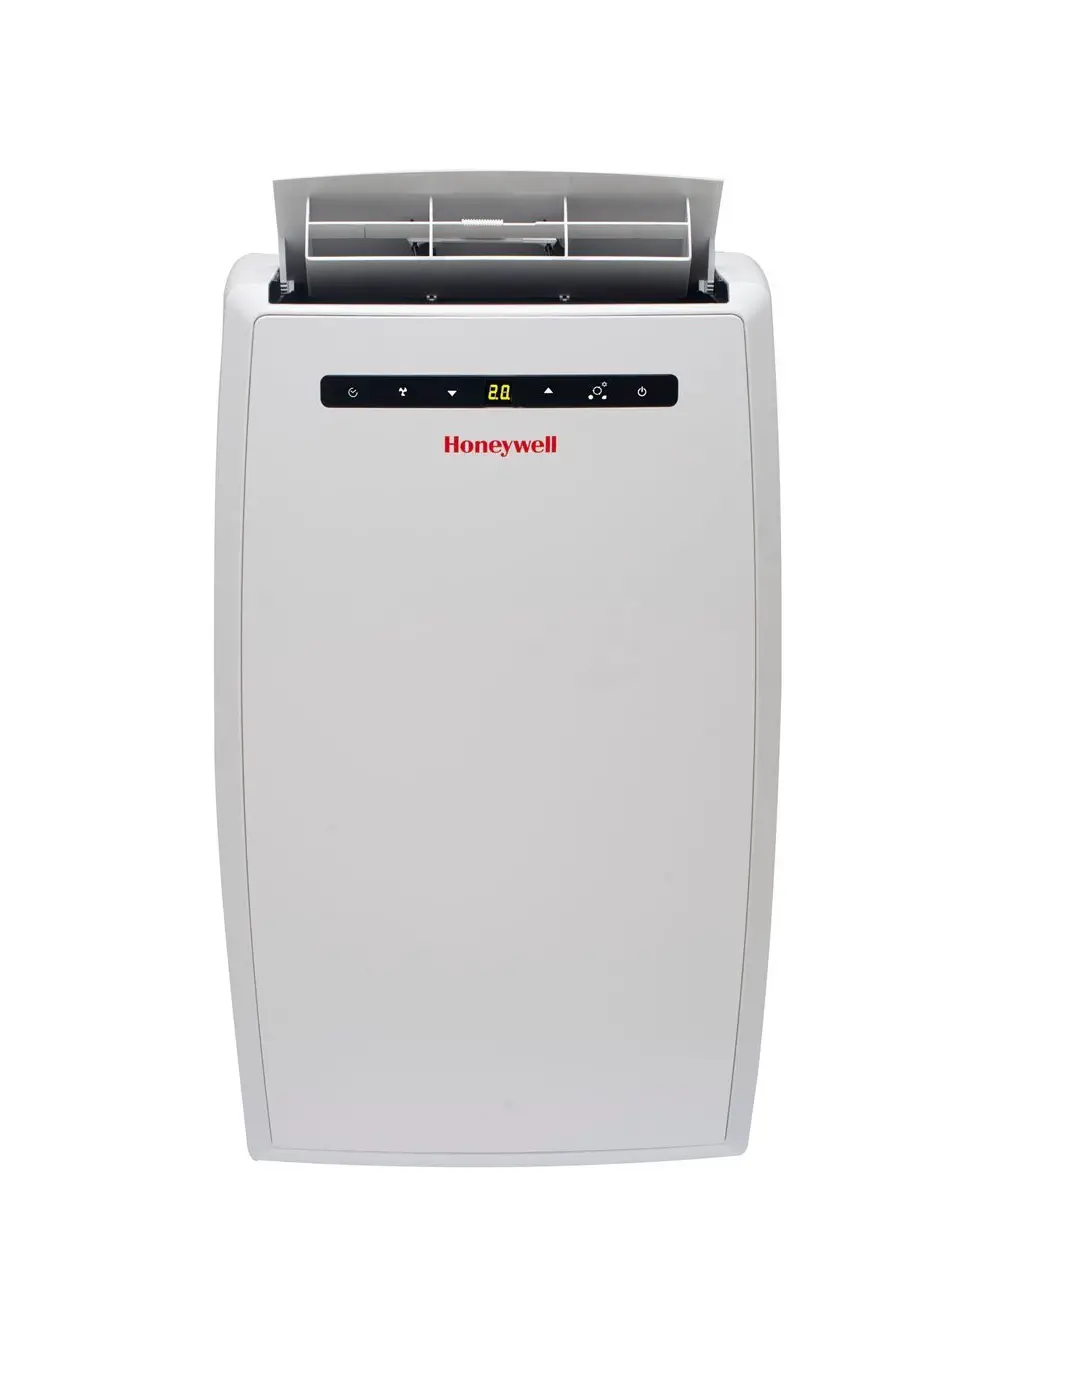 Honeywell Portable Air Conditioner User Manual [MN10CCS, MN10CHCS, MN12CCS, MN12CHCS, MN14CCS, MN14CHCS] - Manualsnap